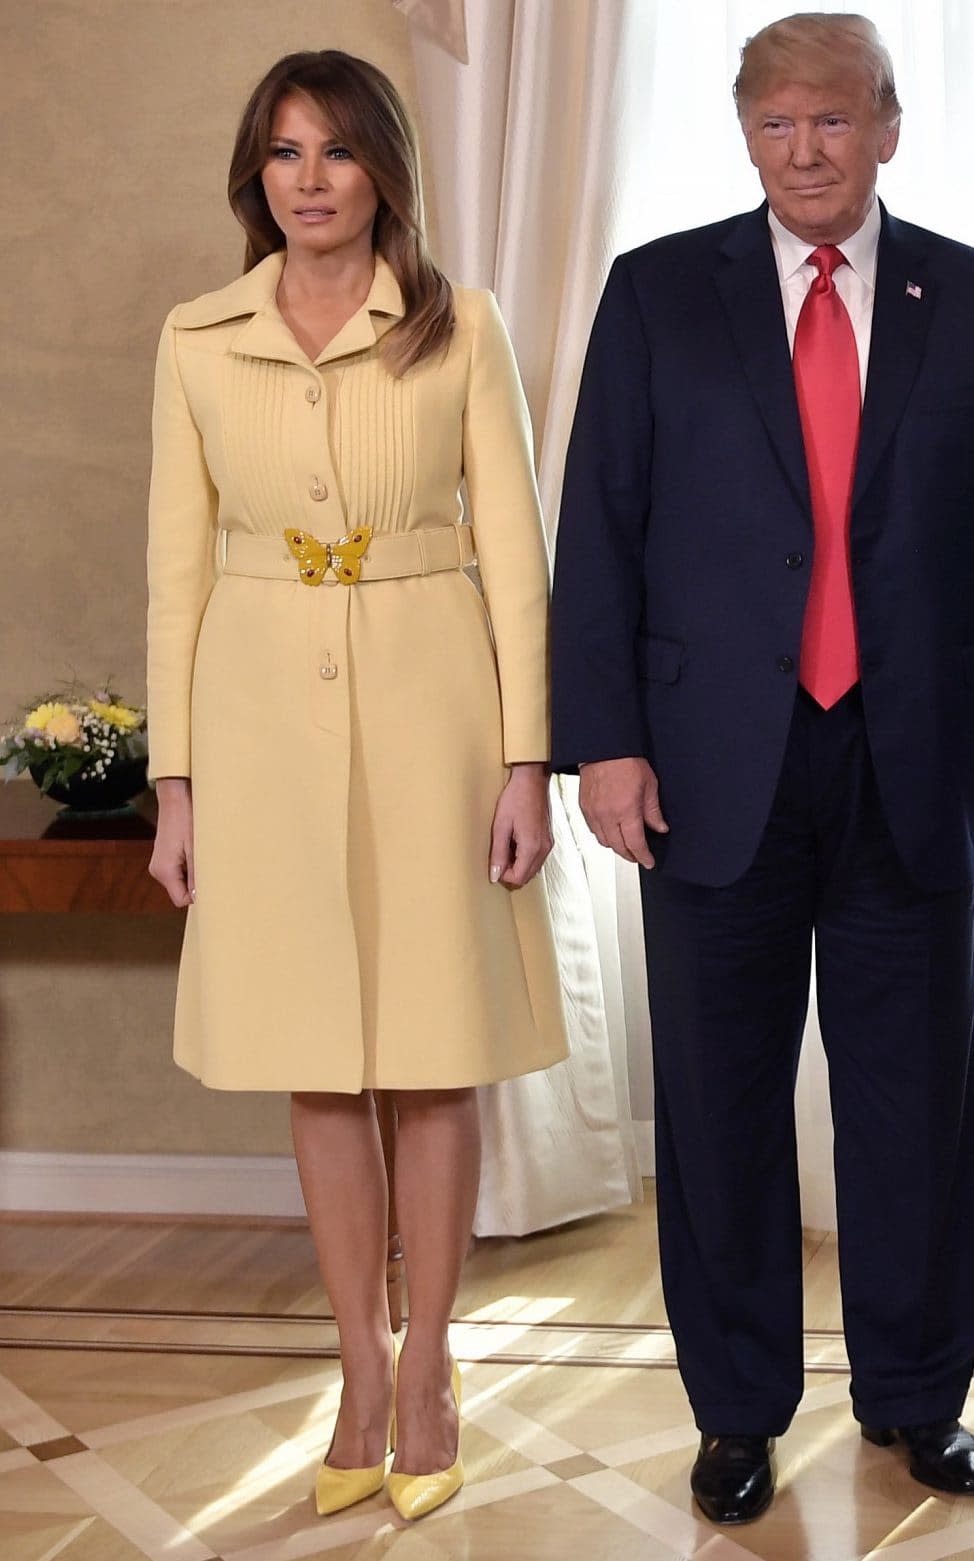 Melania and Donald Trump in Helsinki - TASS